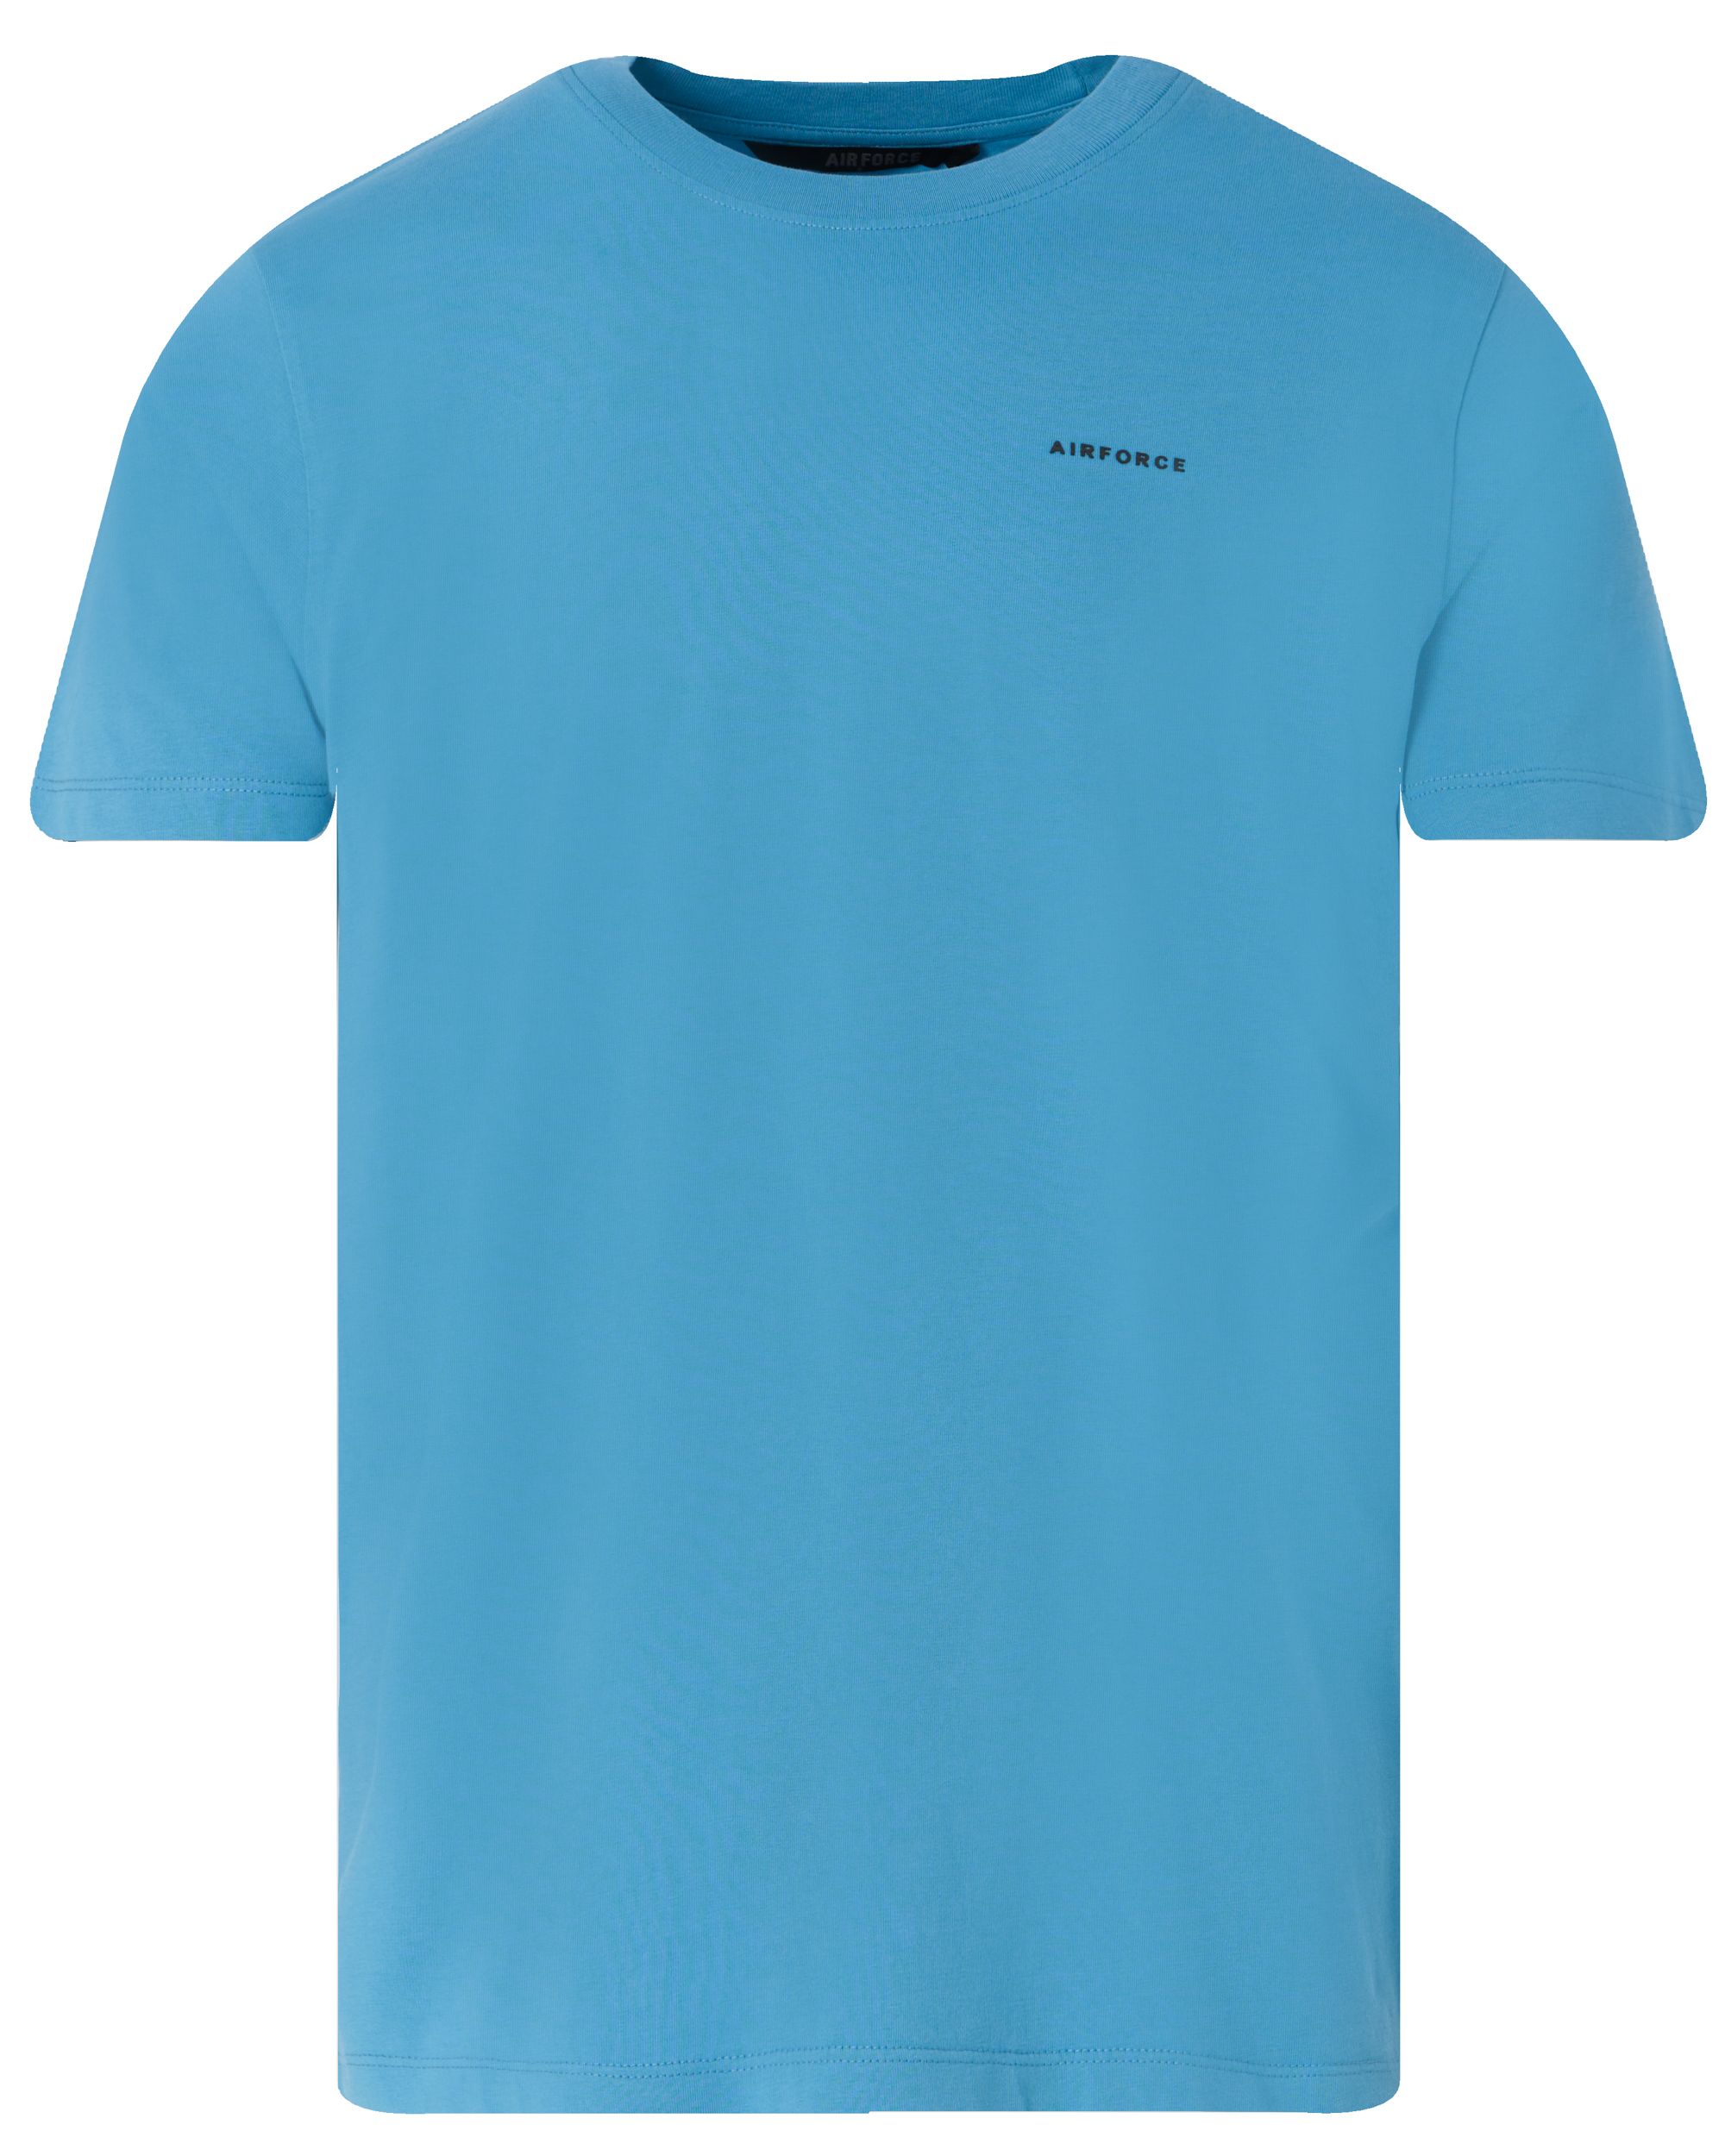 Airforce T-shirt KM Blauw 092916-001-L